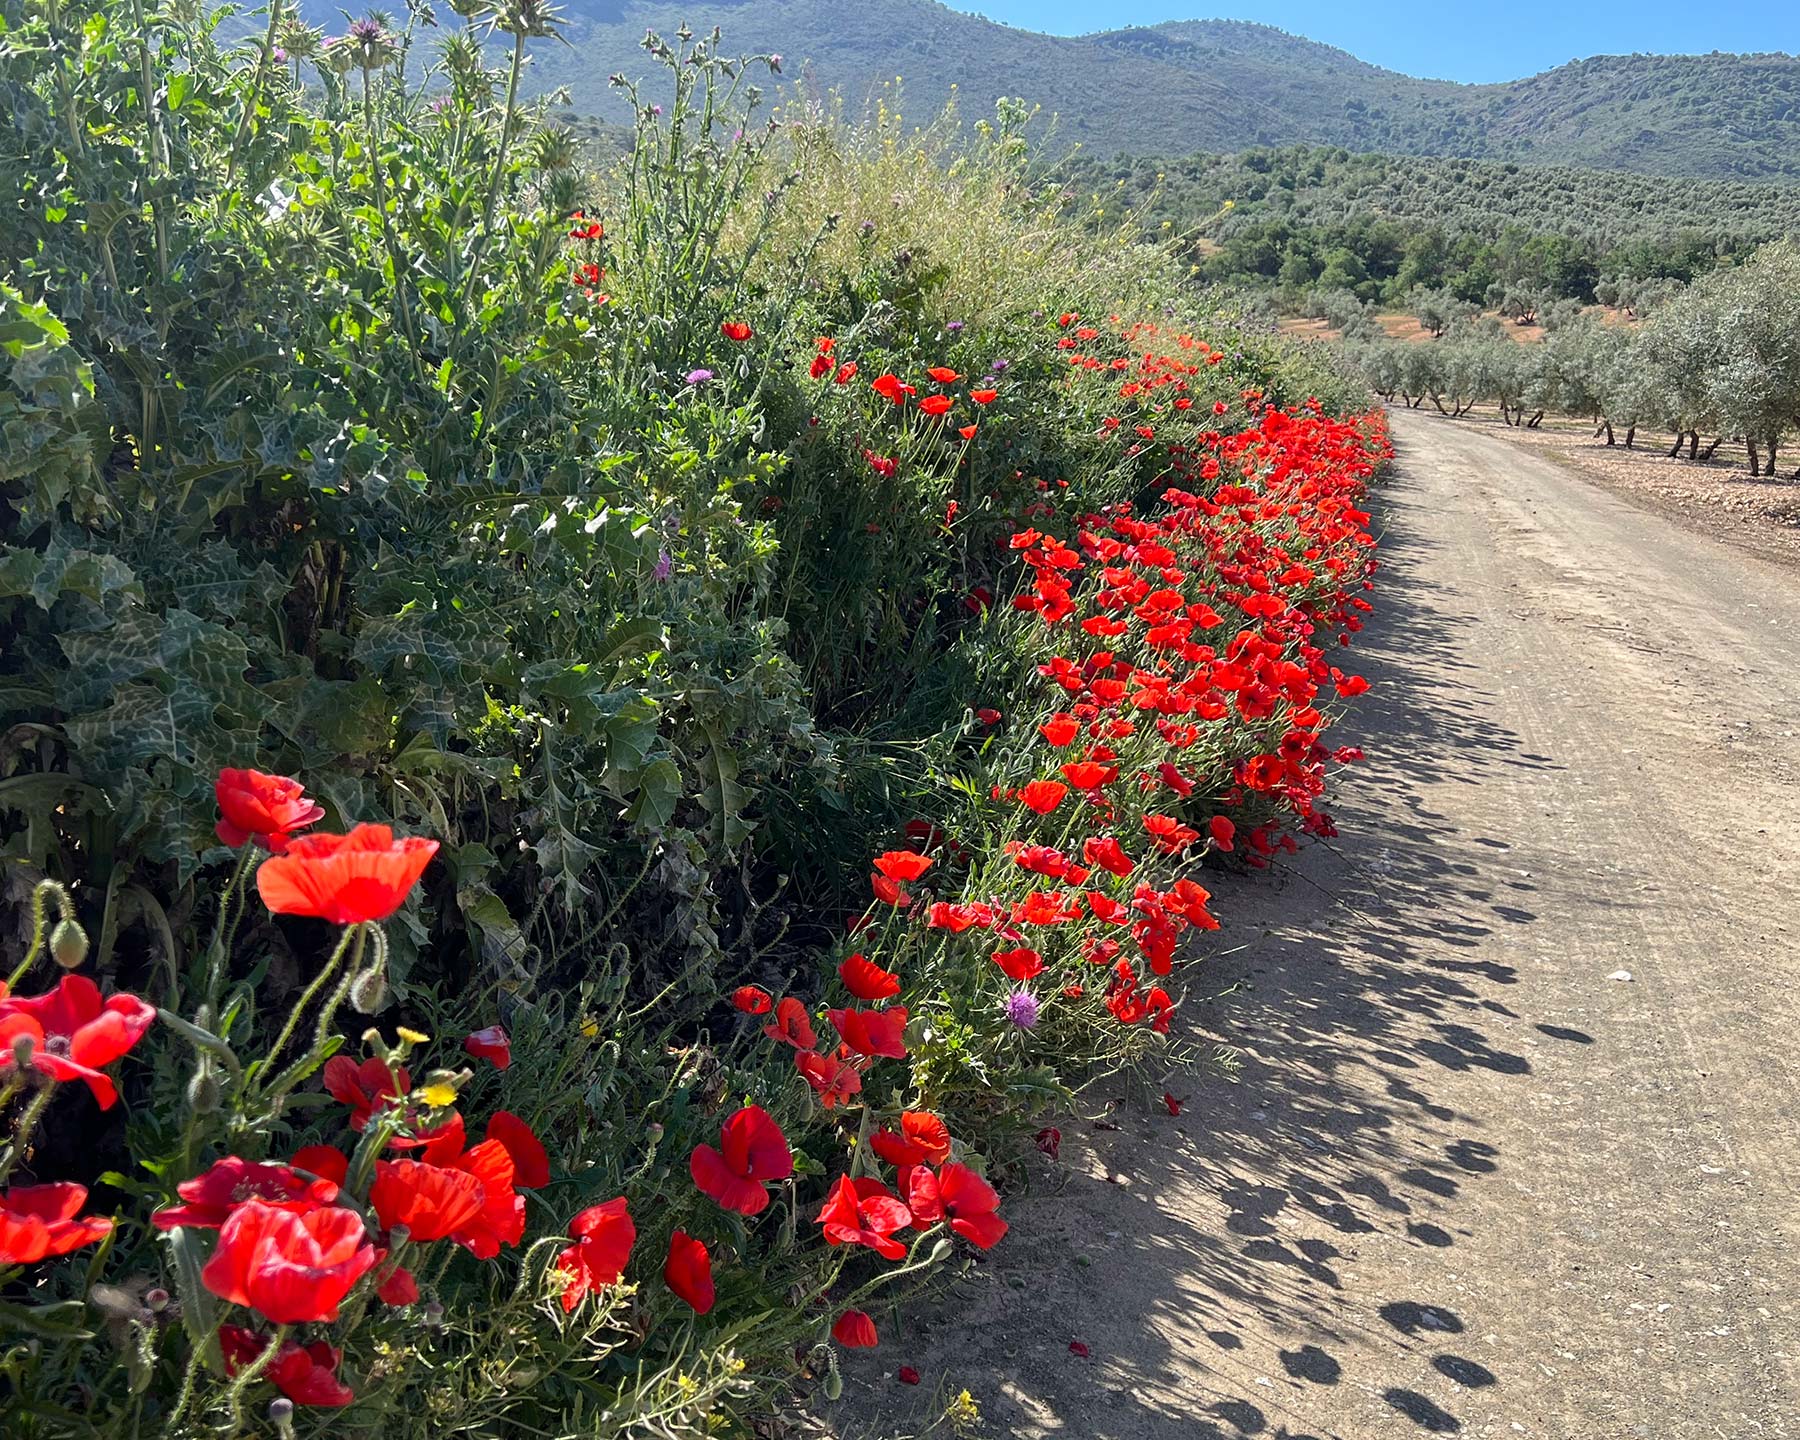 Papaver rhoeas - Poppies growing along the roadside in Spain